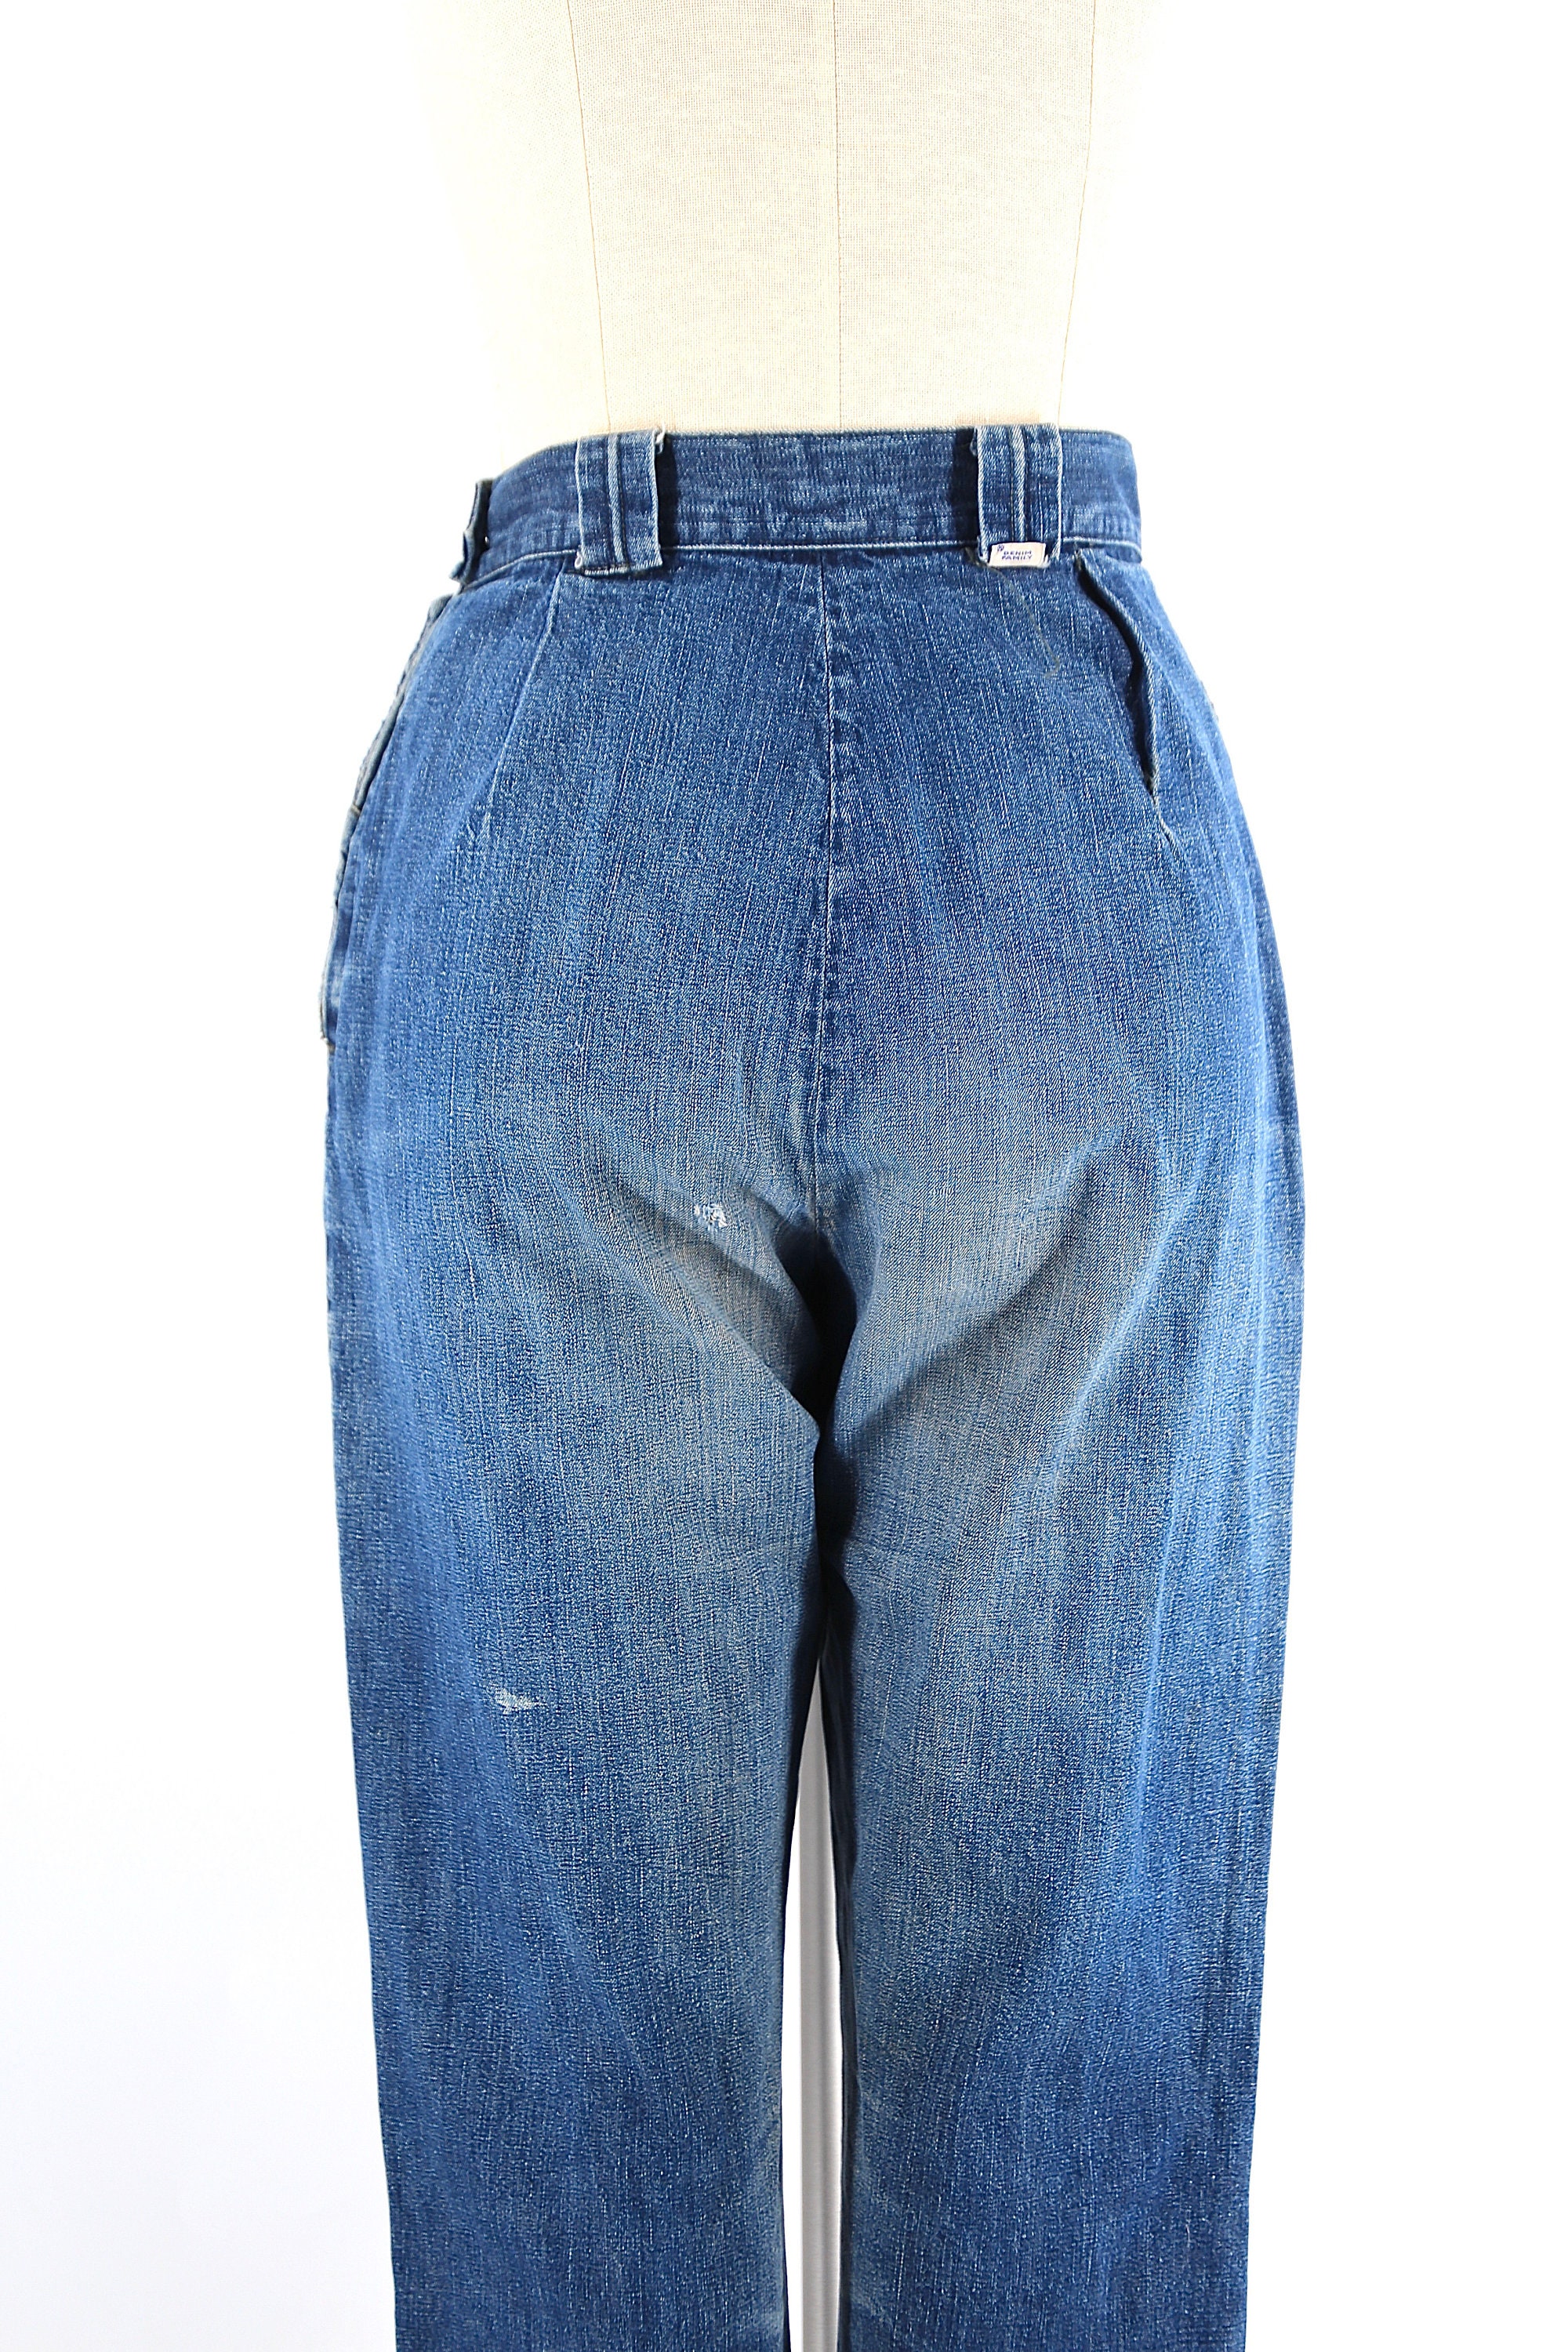 50s LEVIS denim high waisted ranch jeans / 1950s vintage Levis